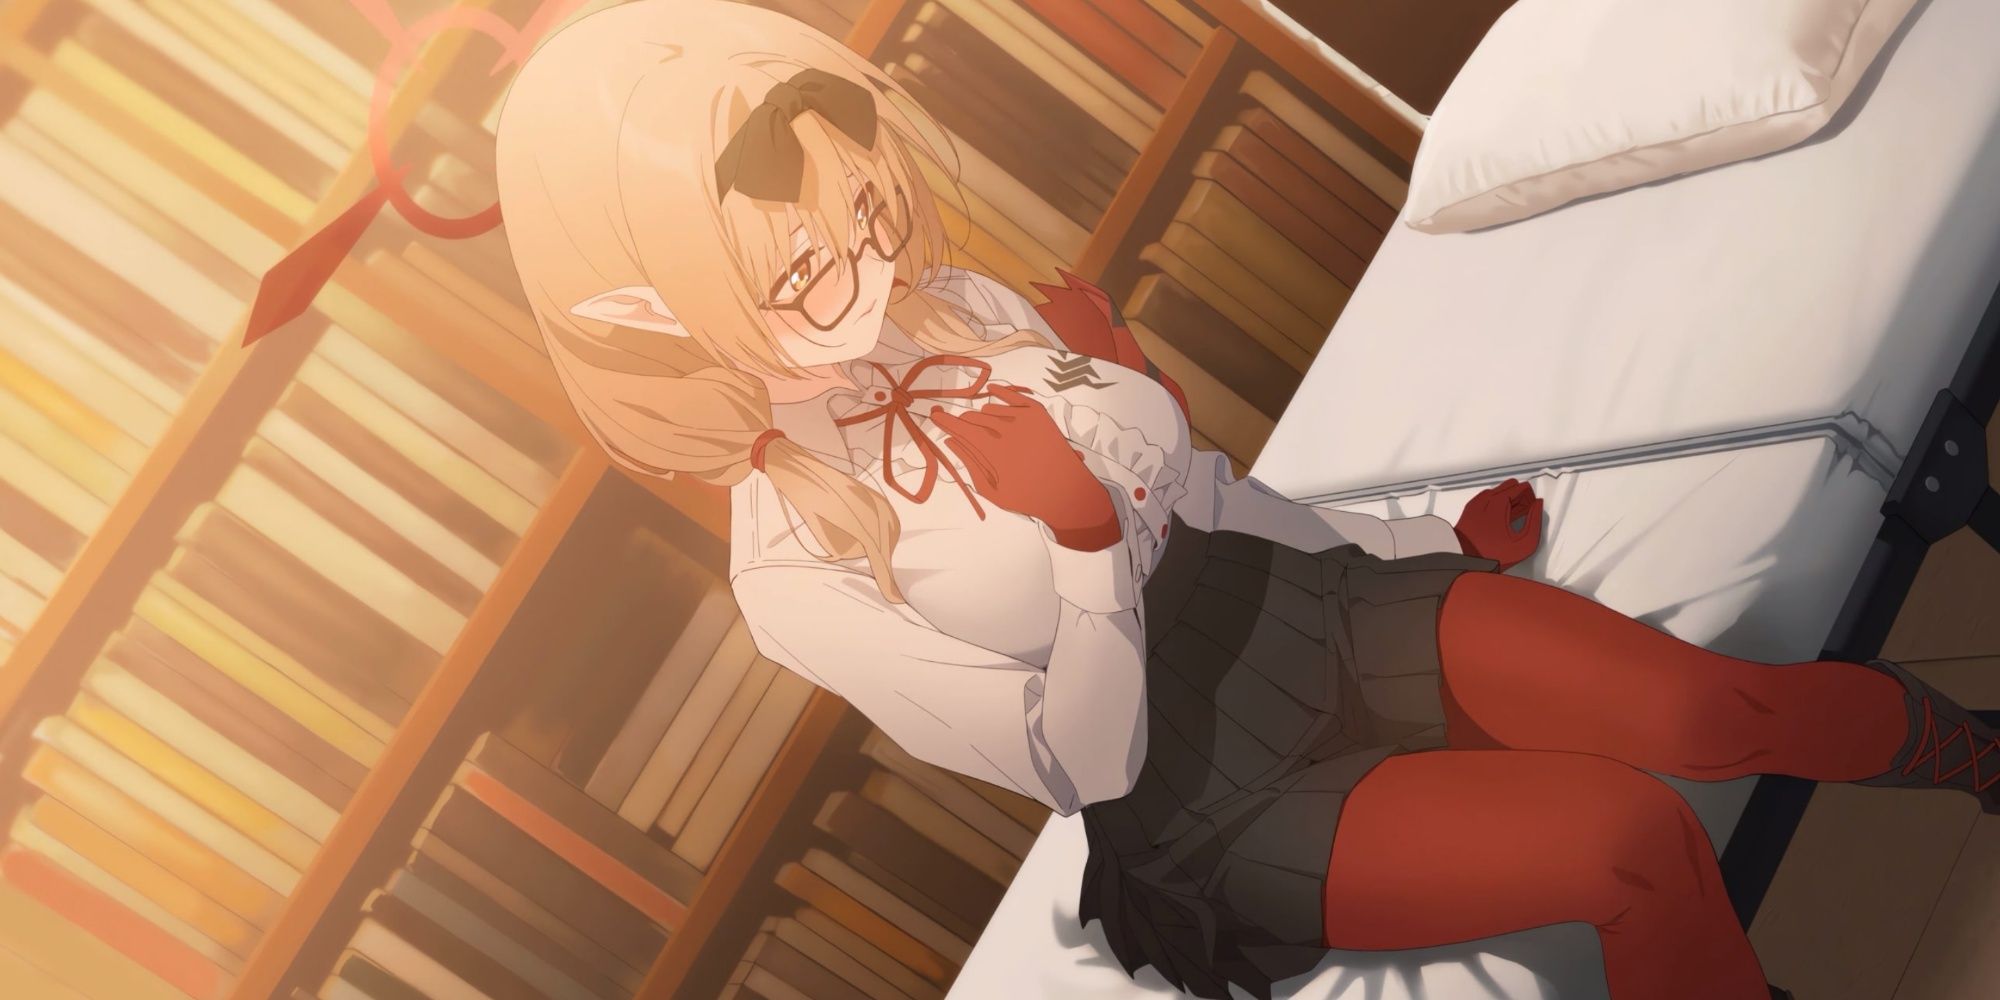 Hinomiya Chinatsu Blushing sitting on beds with a wall full of books behind